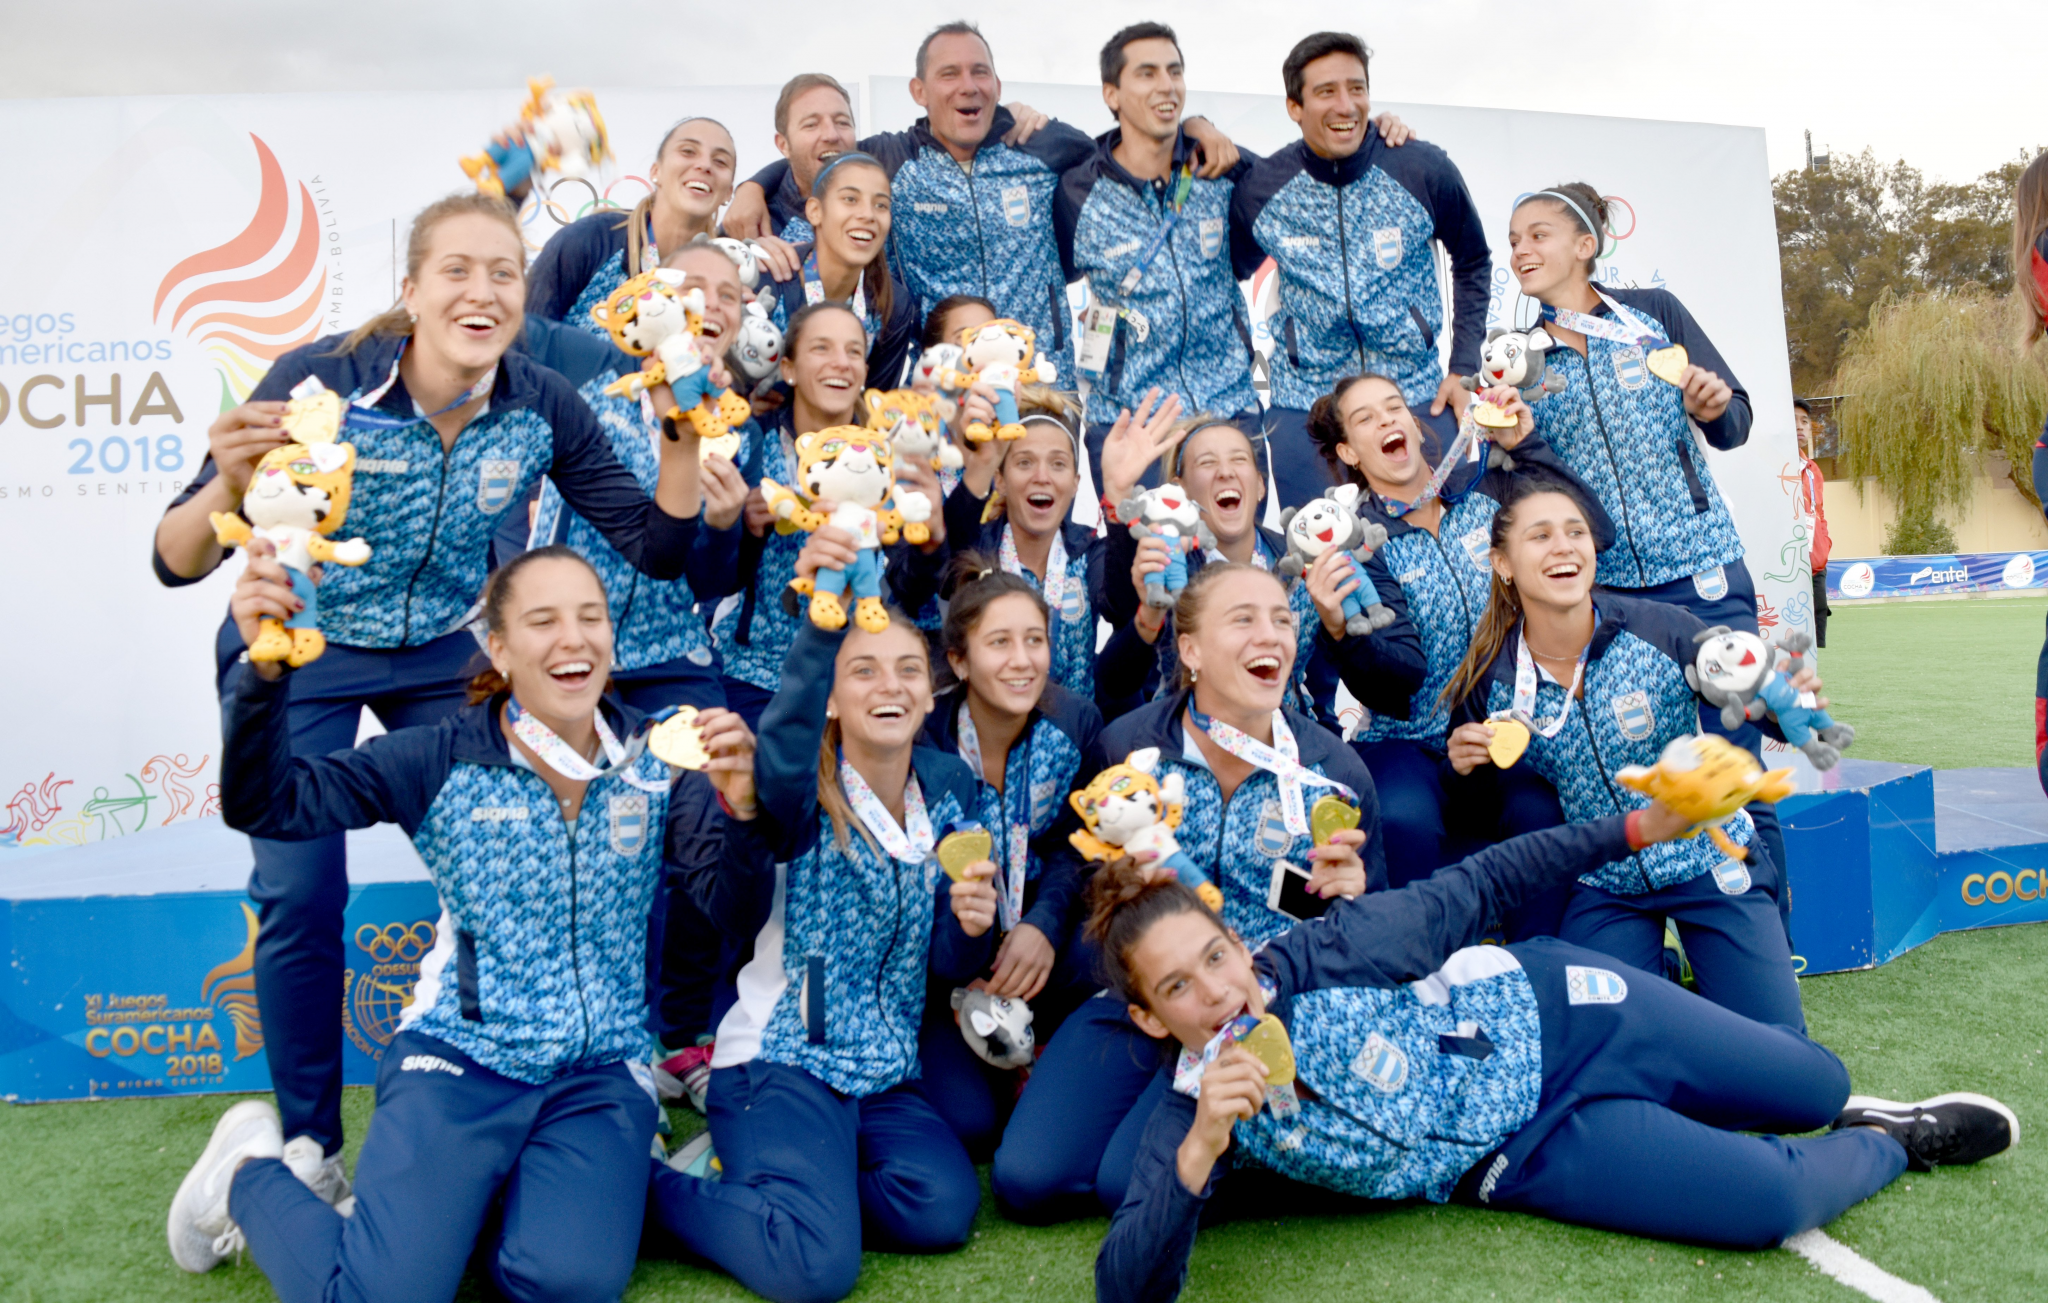 Argentina won the men's and women's hockey titles ©Cochabamba 2018